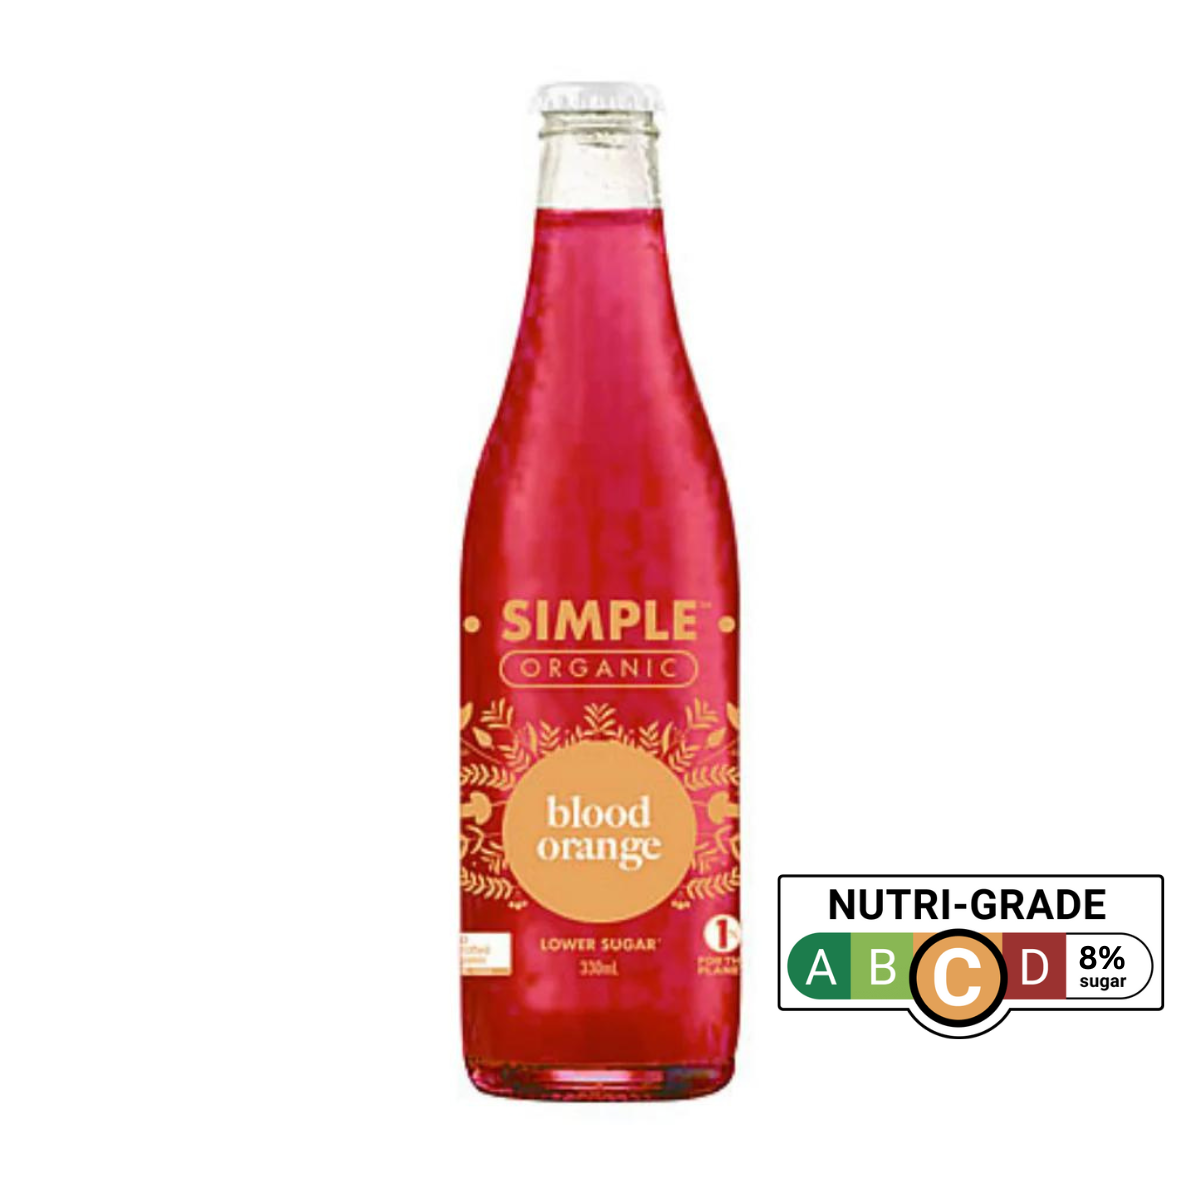 Simple Organics Blood Orange 330ml x 12